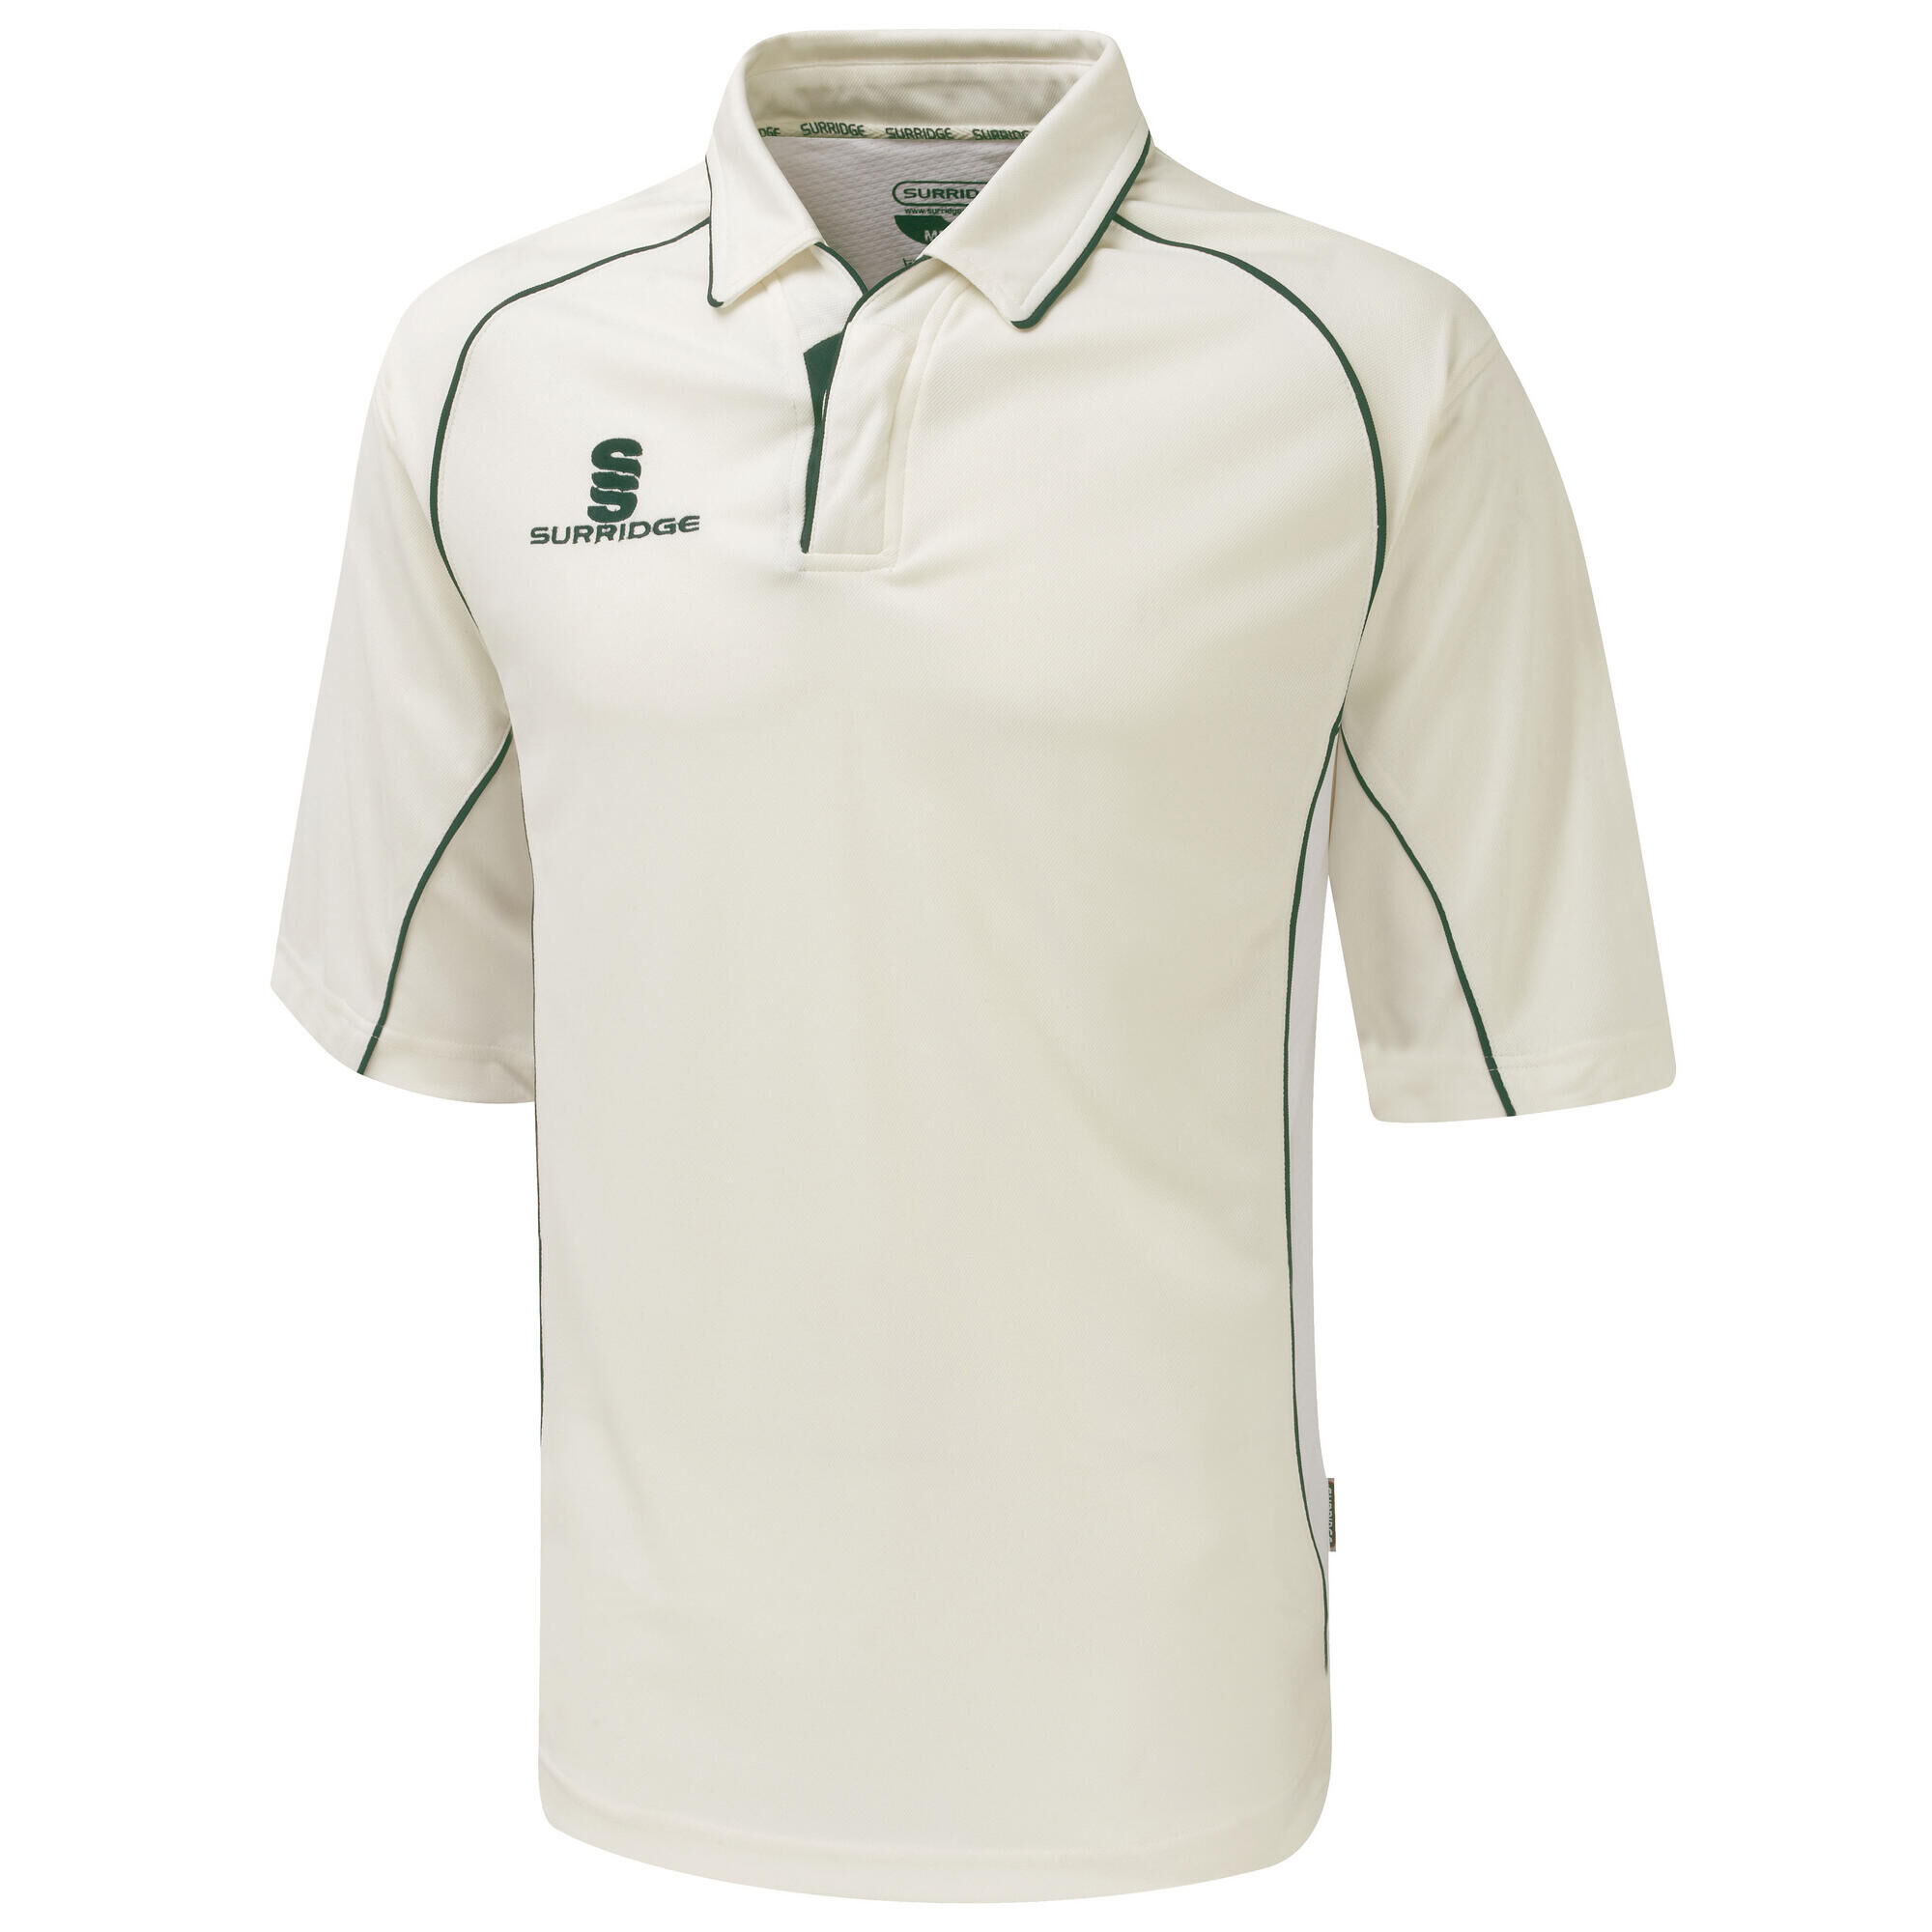 SURRIDGE Mens/Youth Premier Sports 3/4 Sleeve Polo Shirt (White/Green trim)